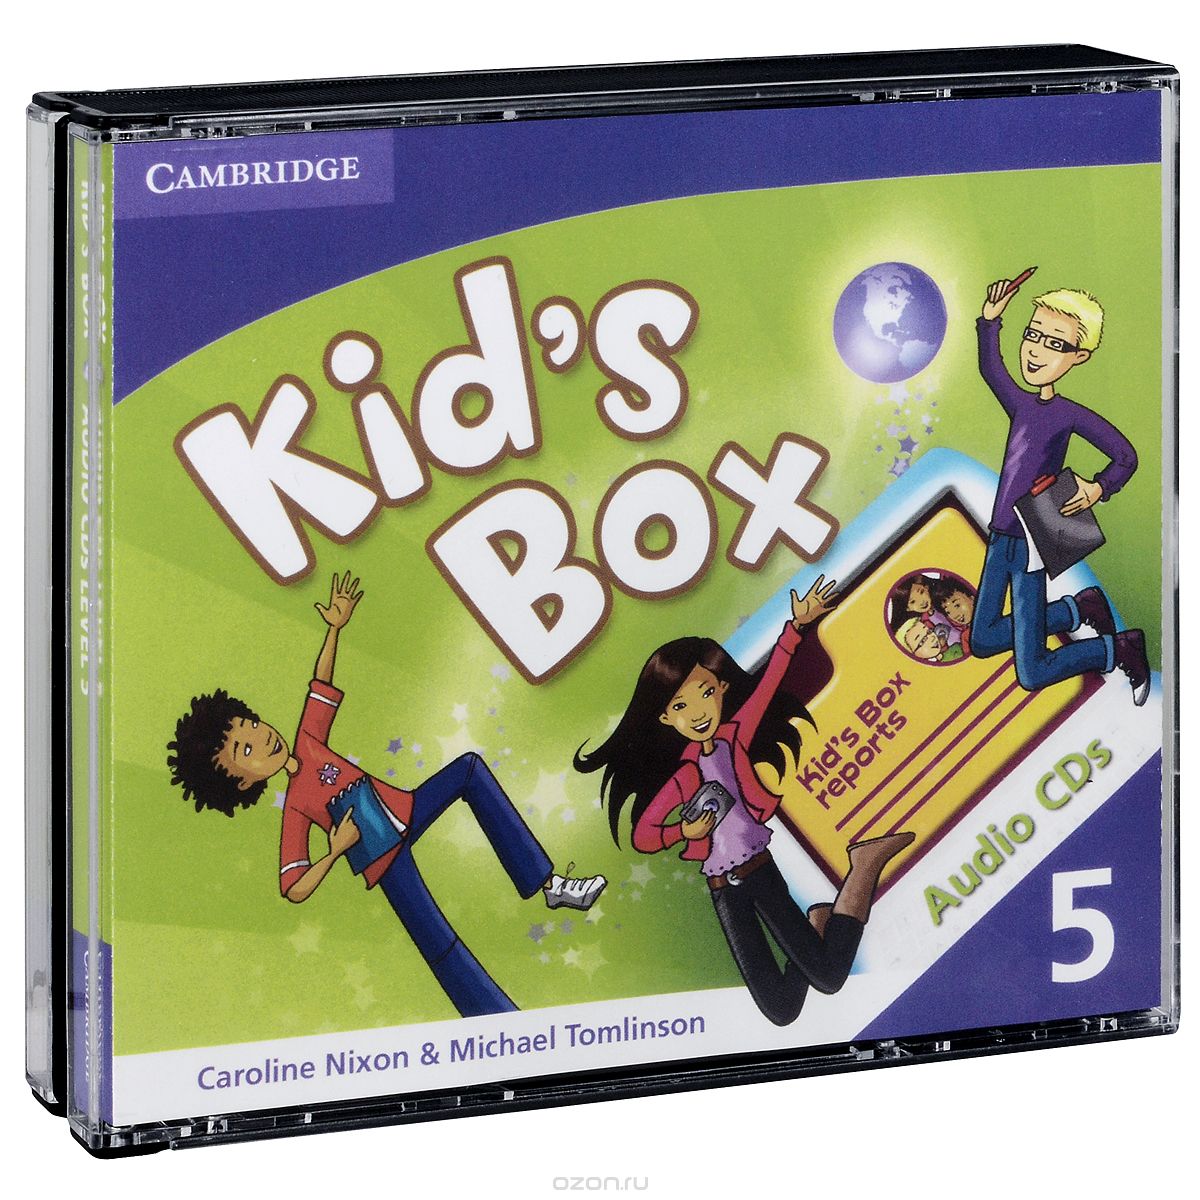 Скачать книгу "Kid's Box 5 (аудиокурс на 3 CD)"